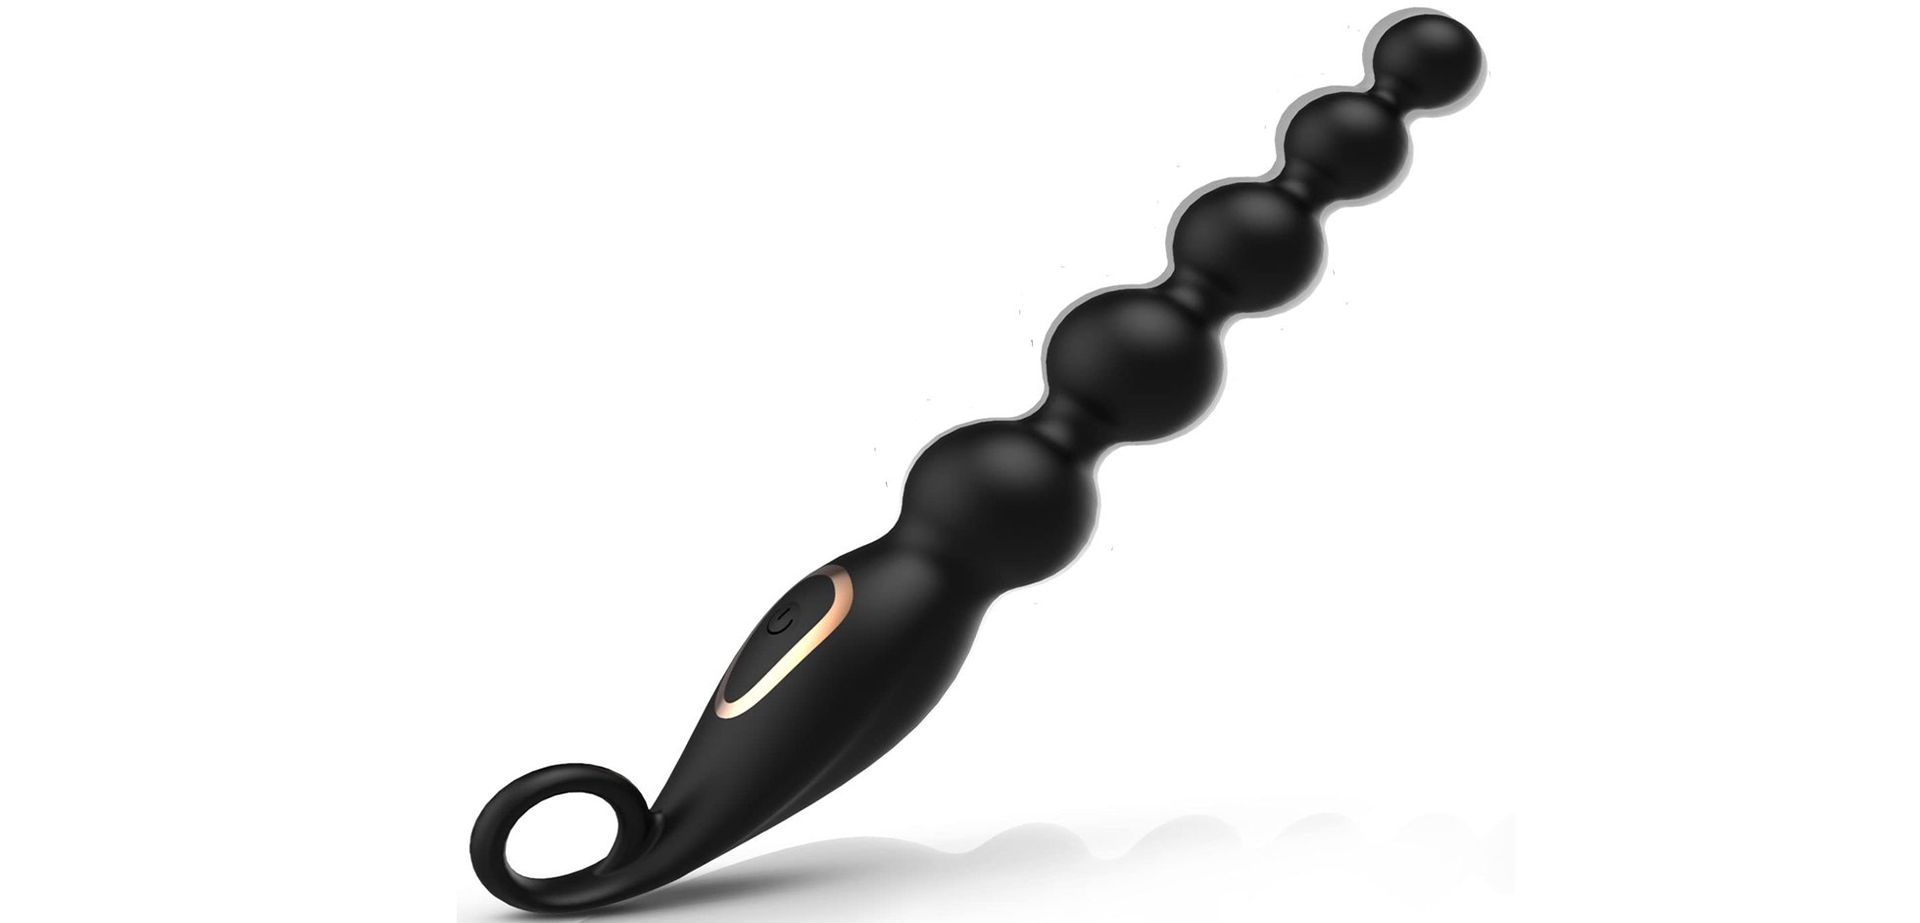 Black vibrating anal beads.